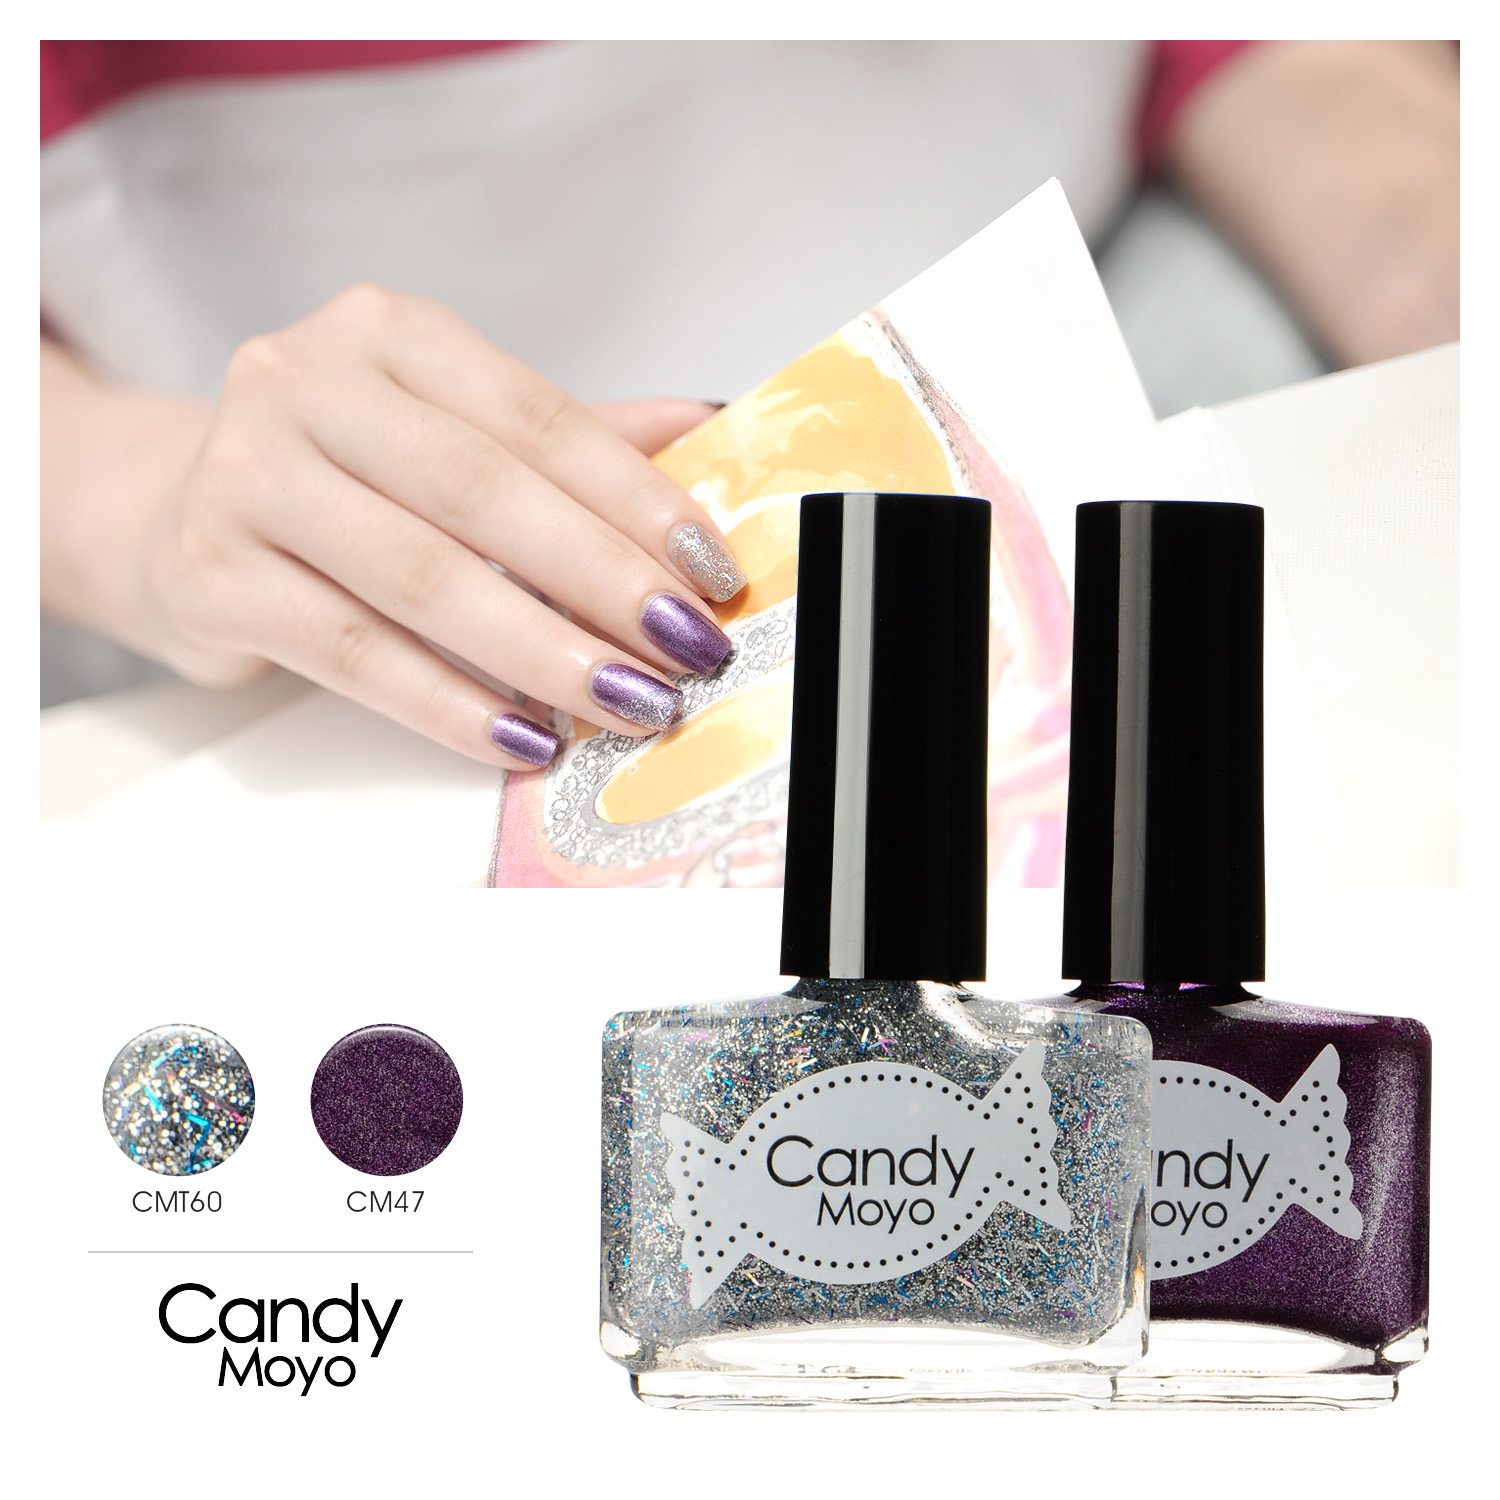 candymoyo指甲油ml*两瓶美甲套组水晶城堡cmt+紫蔷薇cm图片